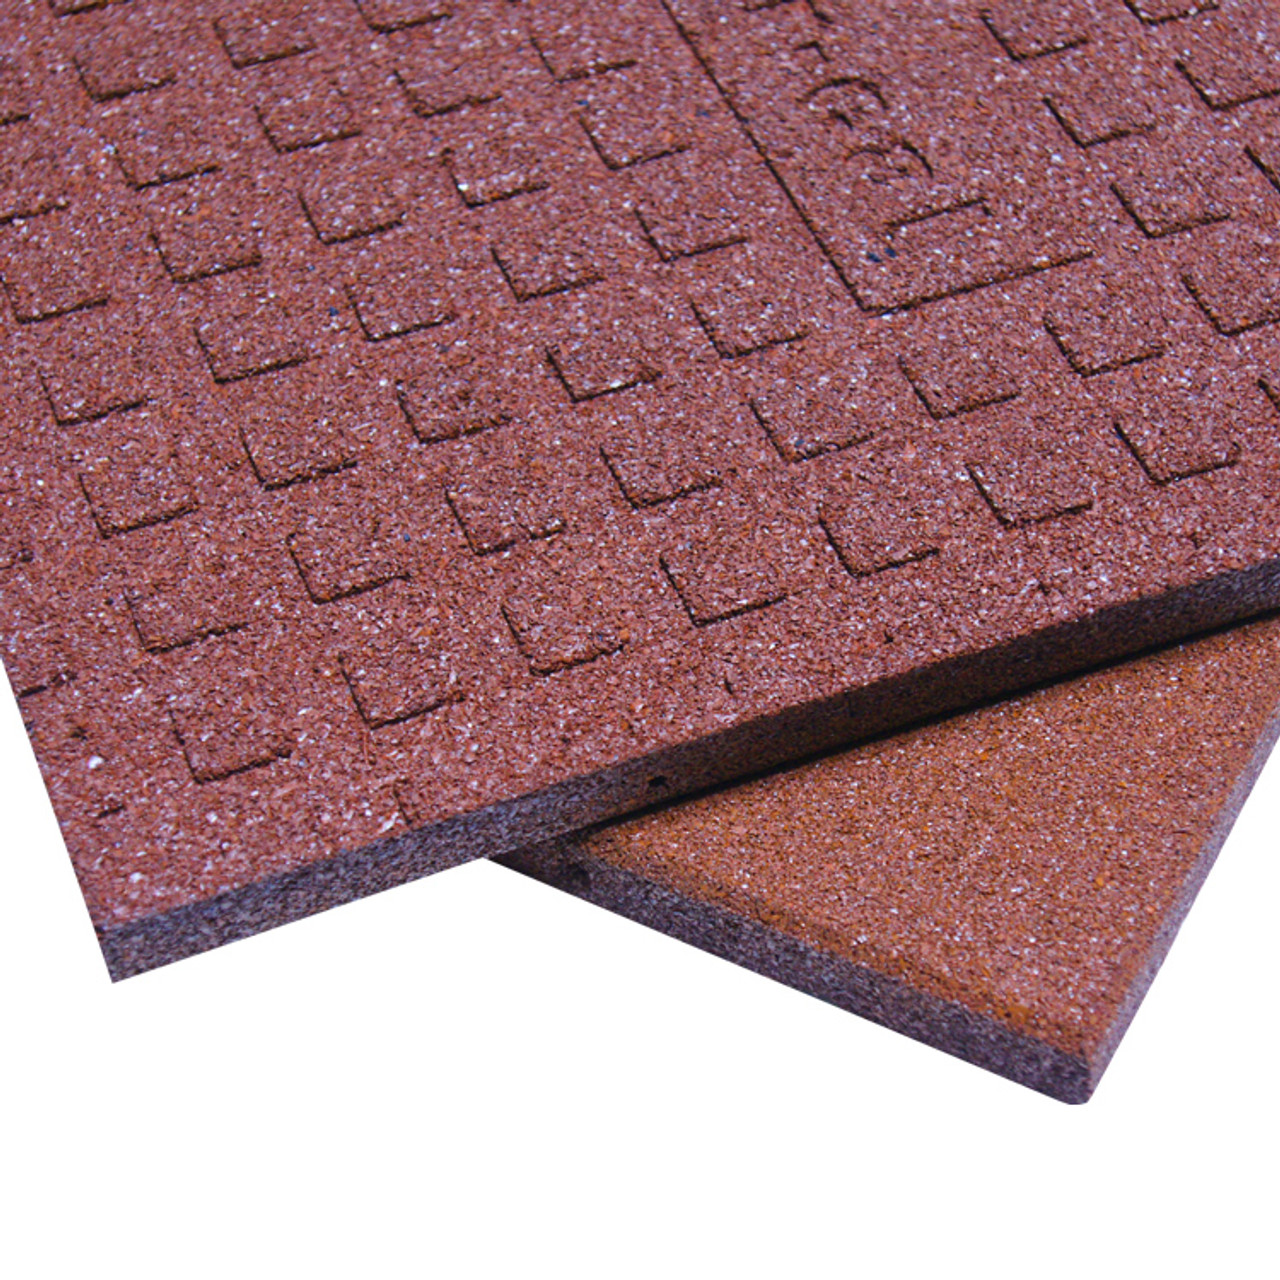 Eco-Sport 1-inch Interlocking Rubber Flooring Tiles